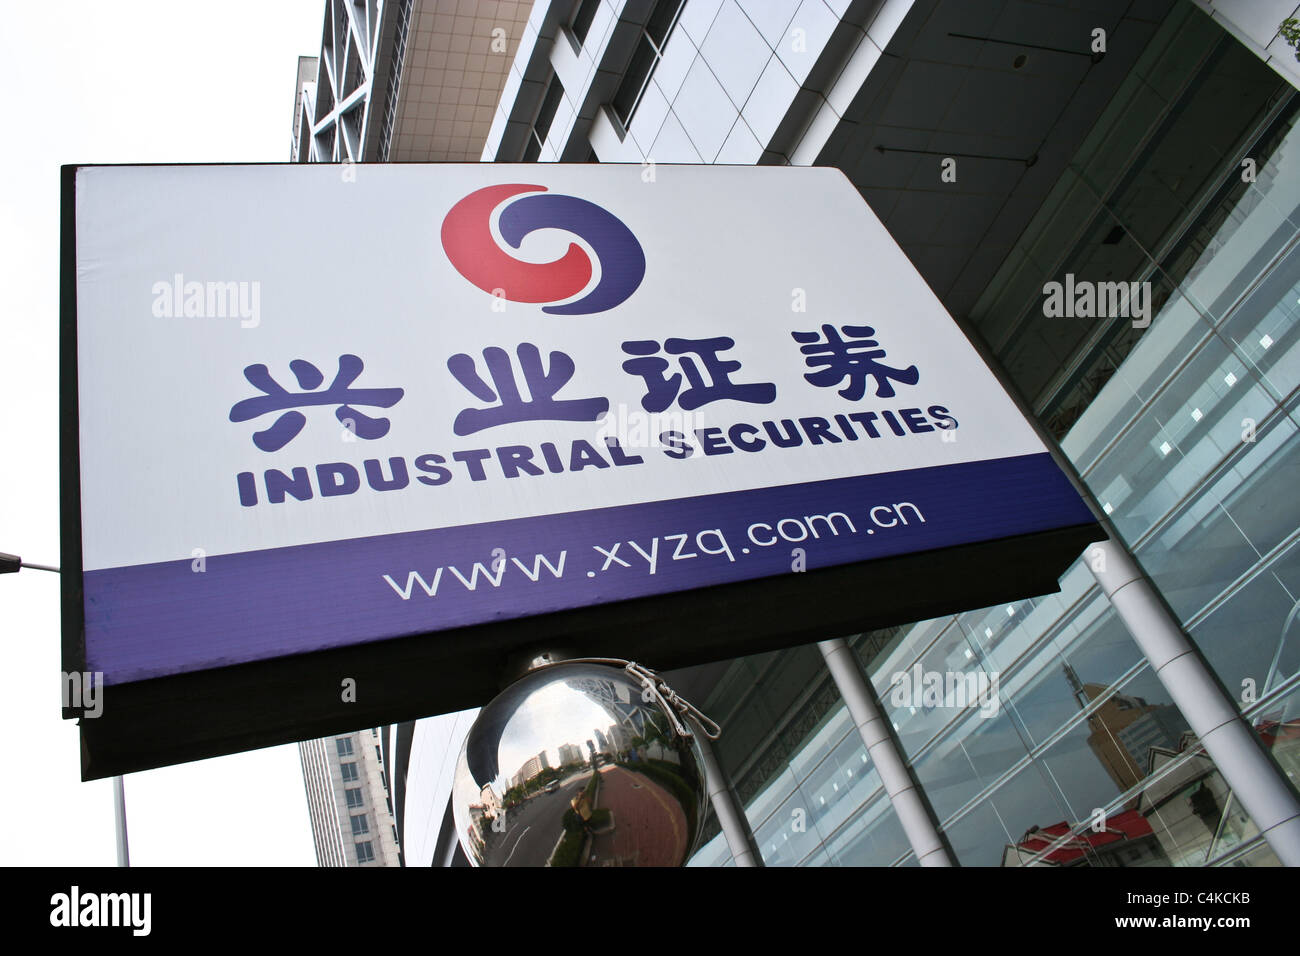 Industrial securities logo sign Stock Photo